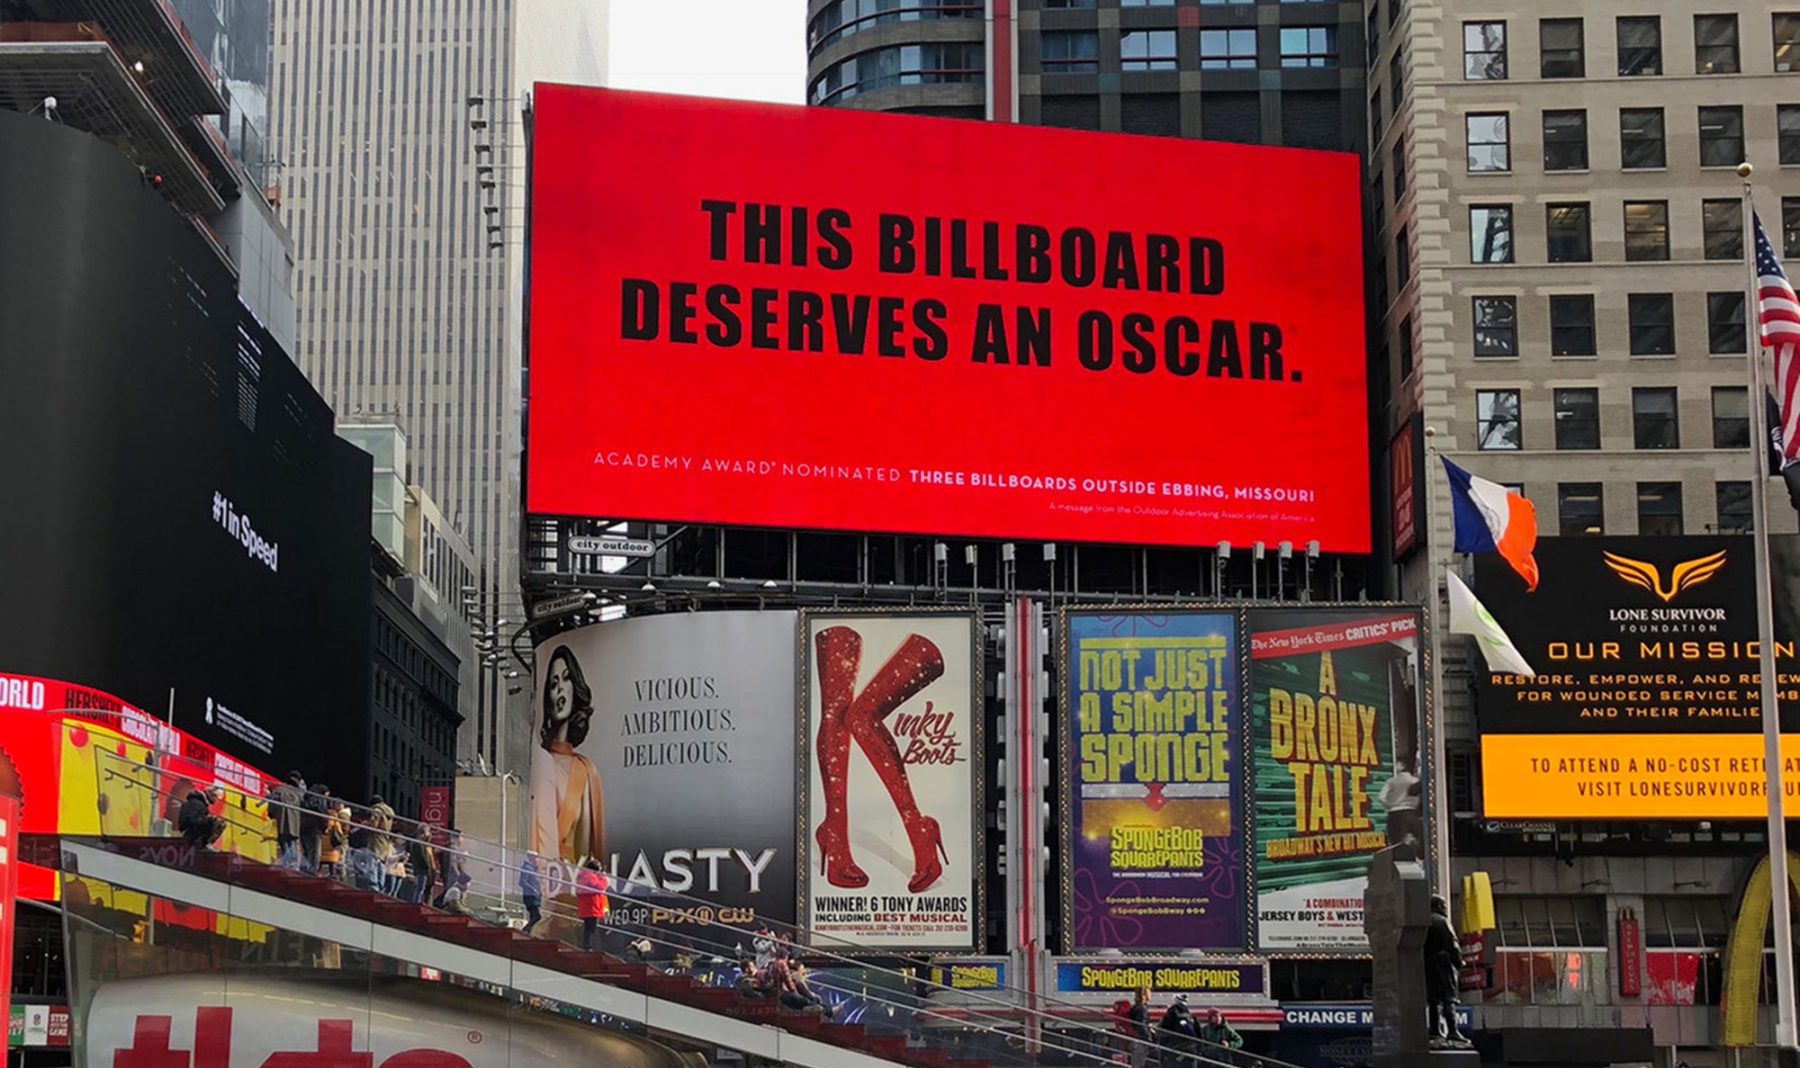 This Billboard deserves an oscar.